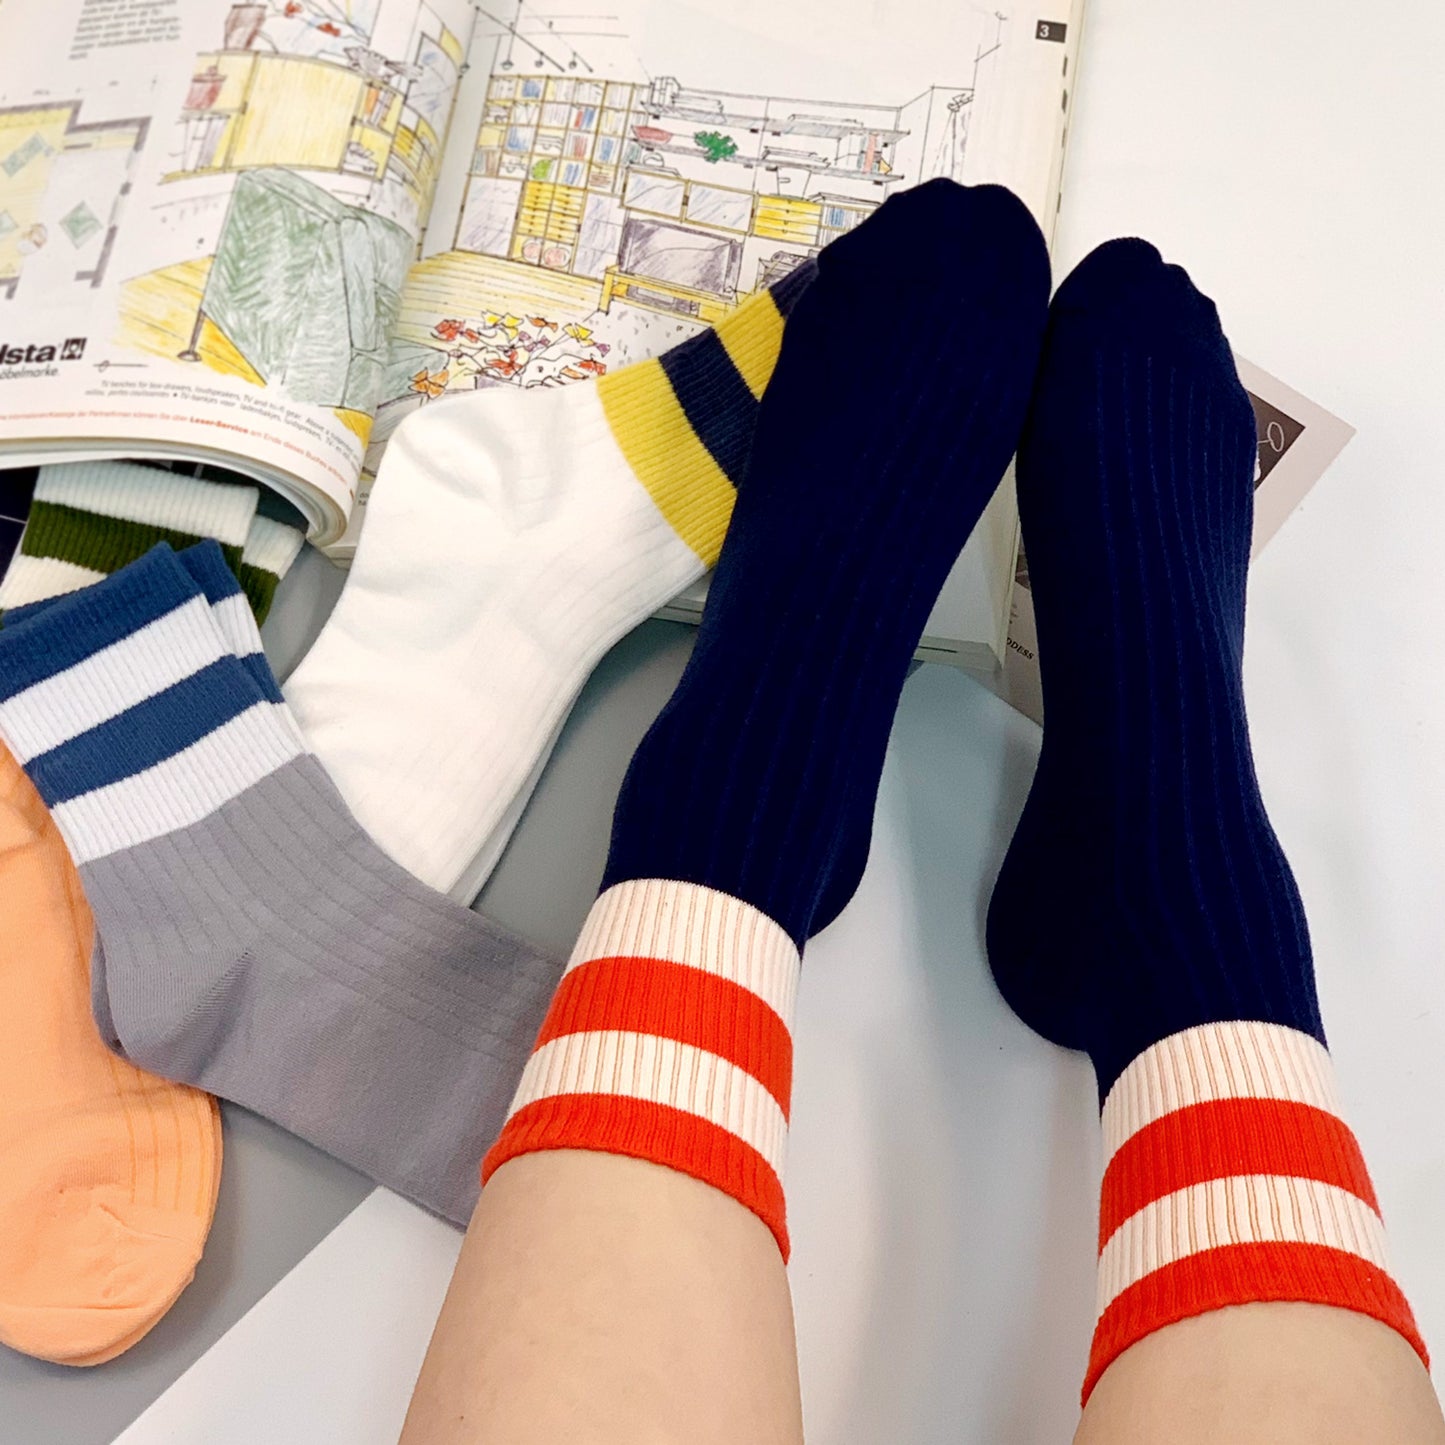 Women's Crew Ribbed Two-Tone Stripe Socks